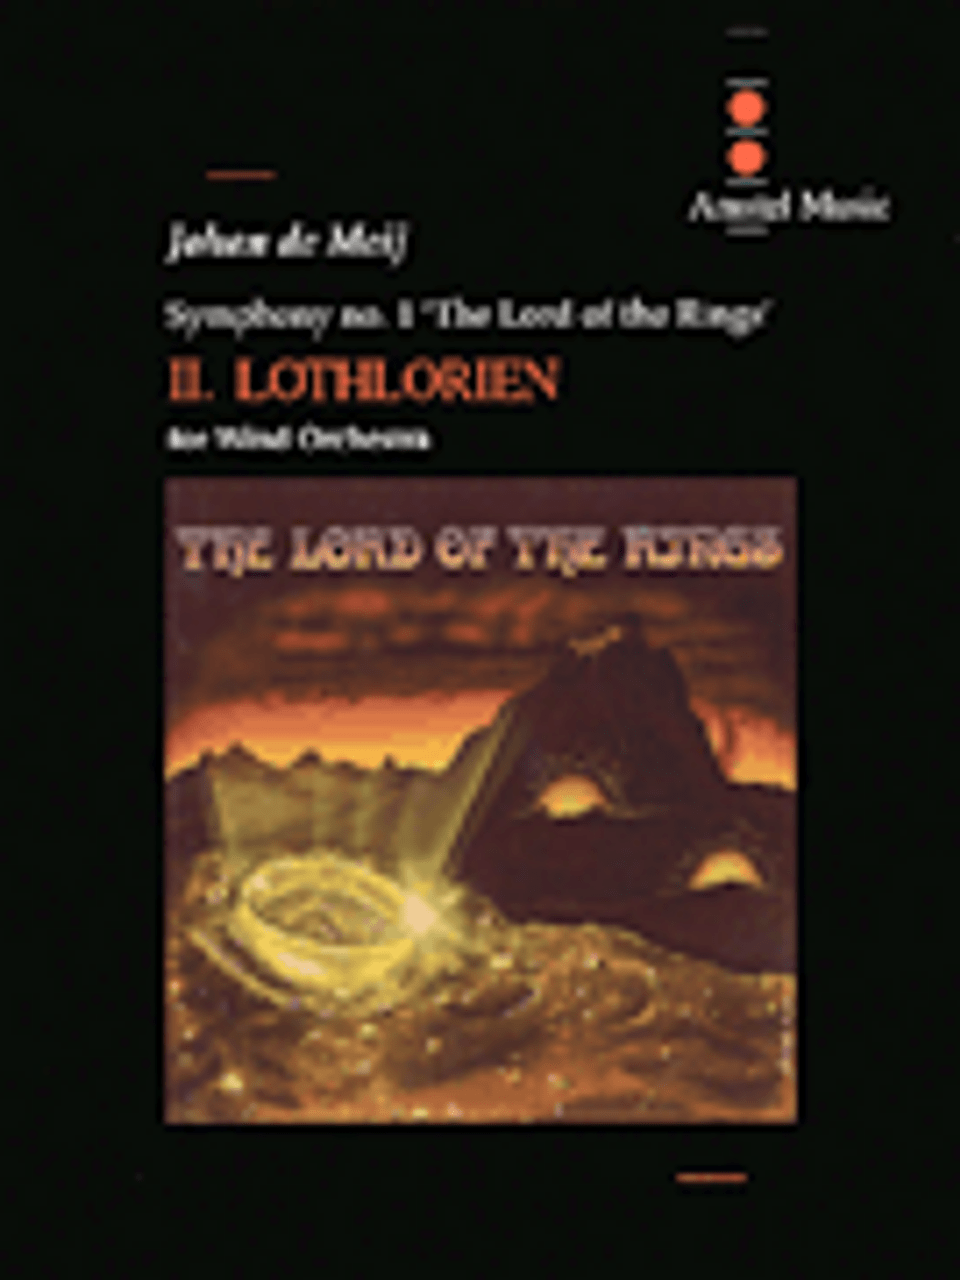 Johan De Meij, London Symphony Orchestra, David Warble - Lord of the Rings  Symphony 1 - Amazon.com Music